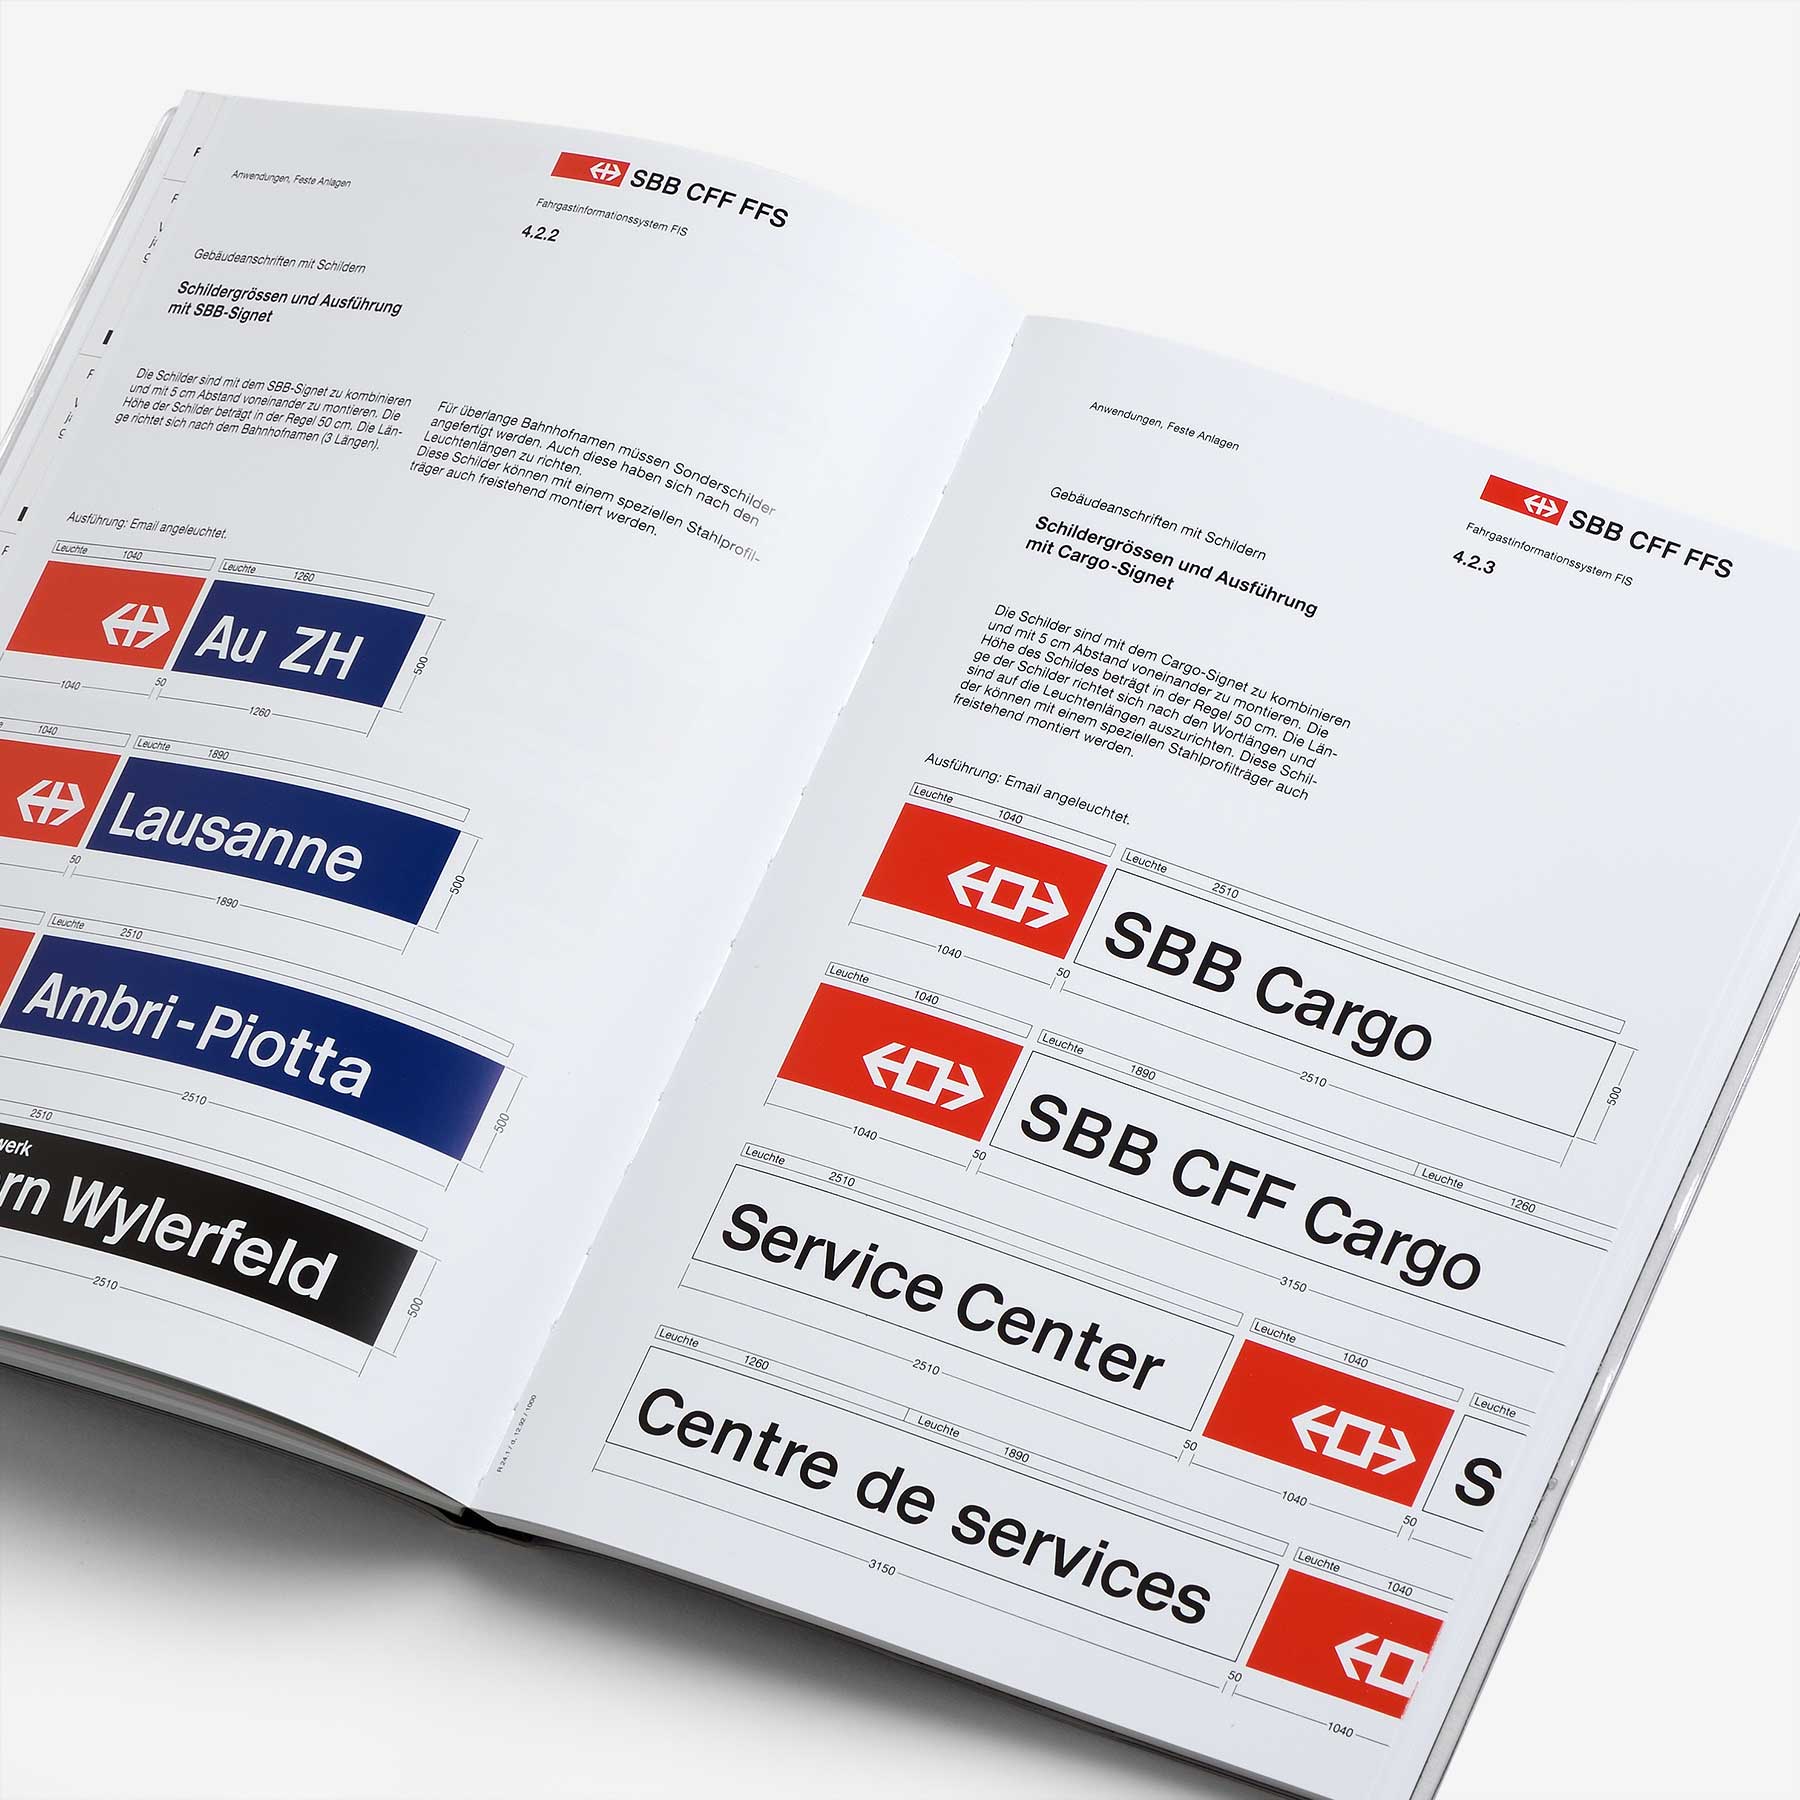 Passenger Information System: Design Manual for the Swiss Federal Railways by Josef Müller-Brockmann